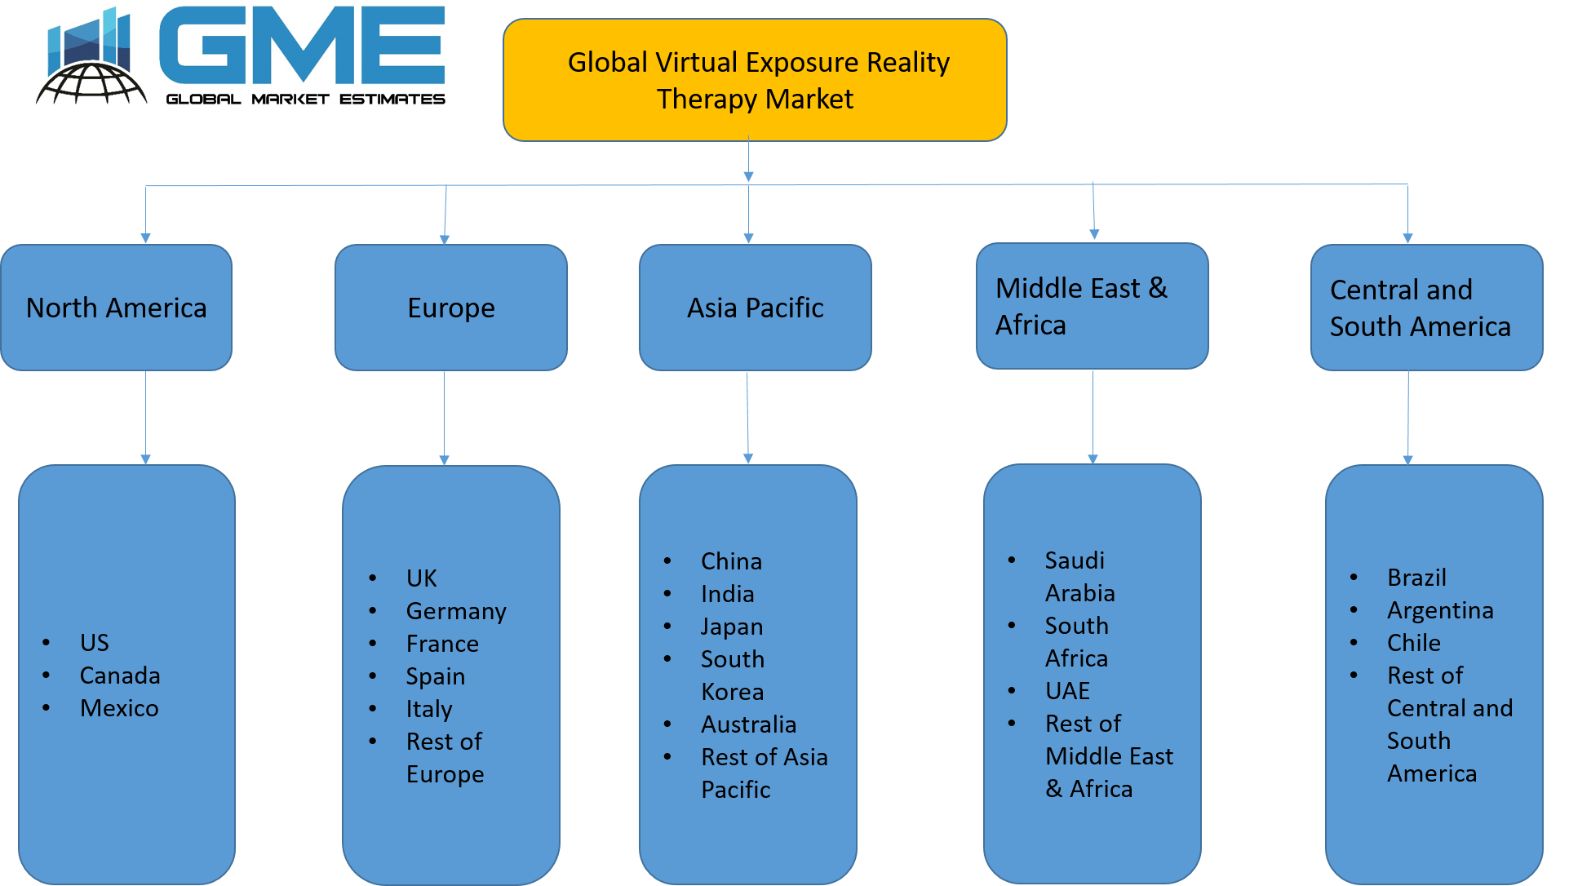 Global Virtual Exposure Reality Therapy Market - Regional Analysis